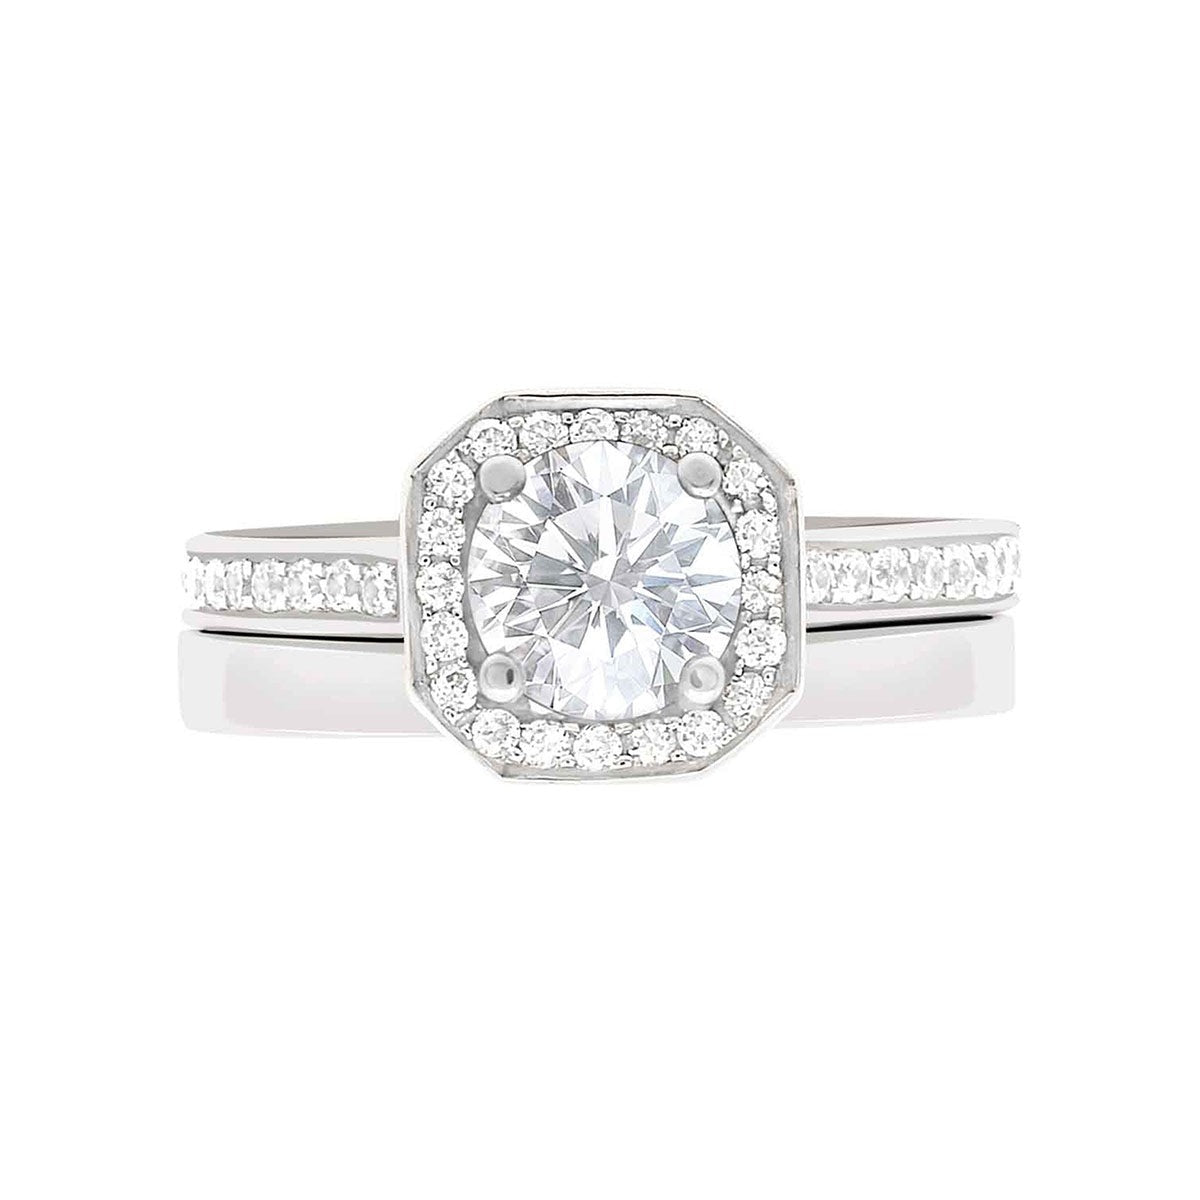 Pavé Halo Diamond Ring in White Gold laying flat with a matching plain wedding band